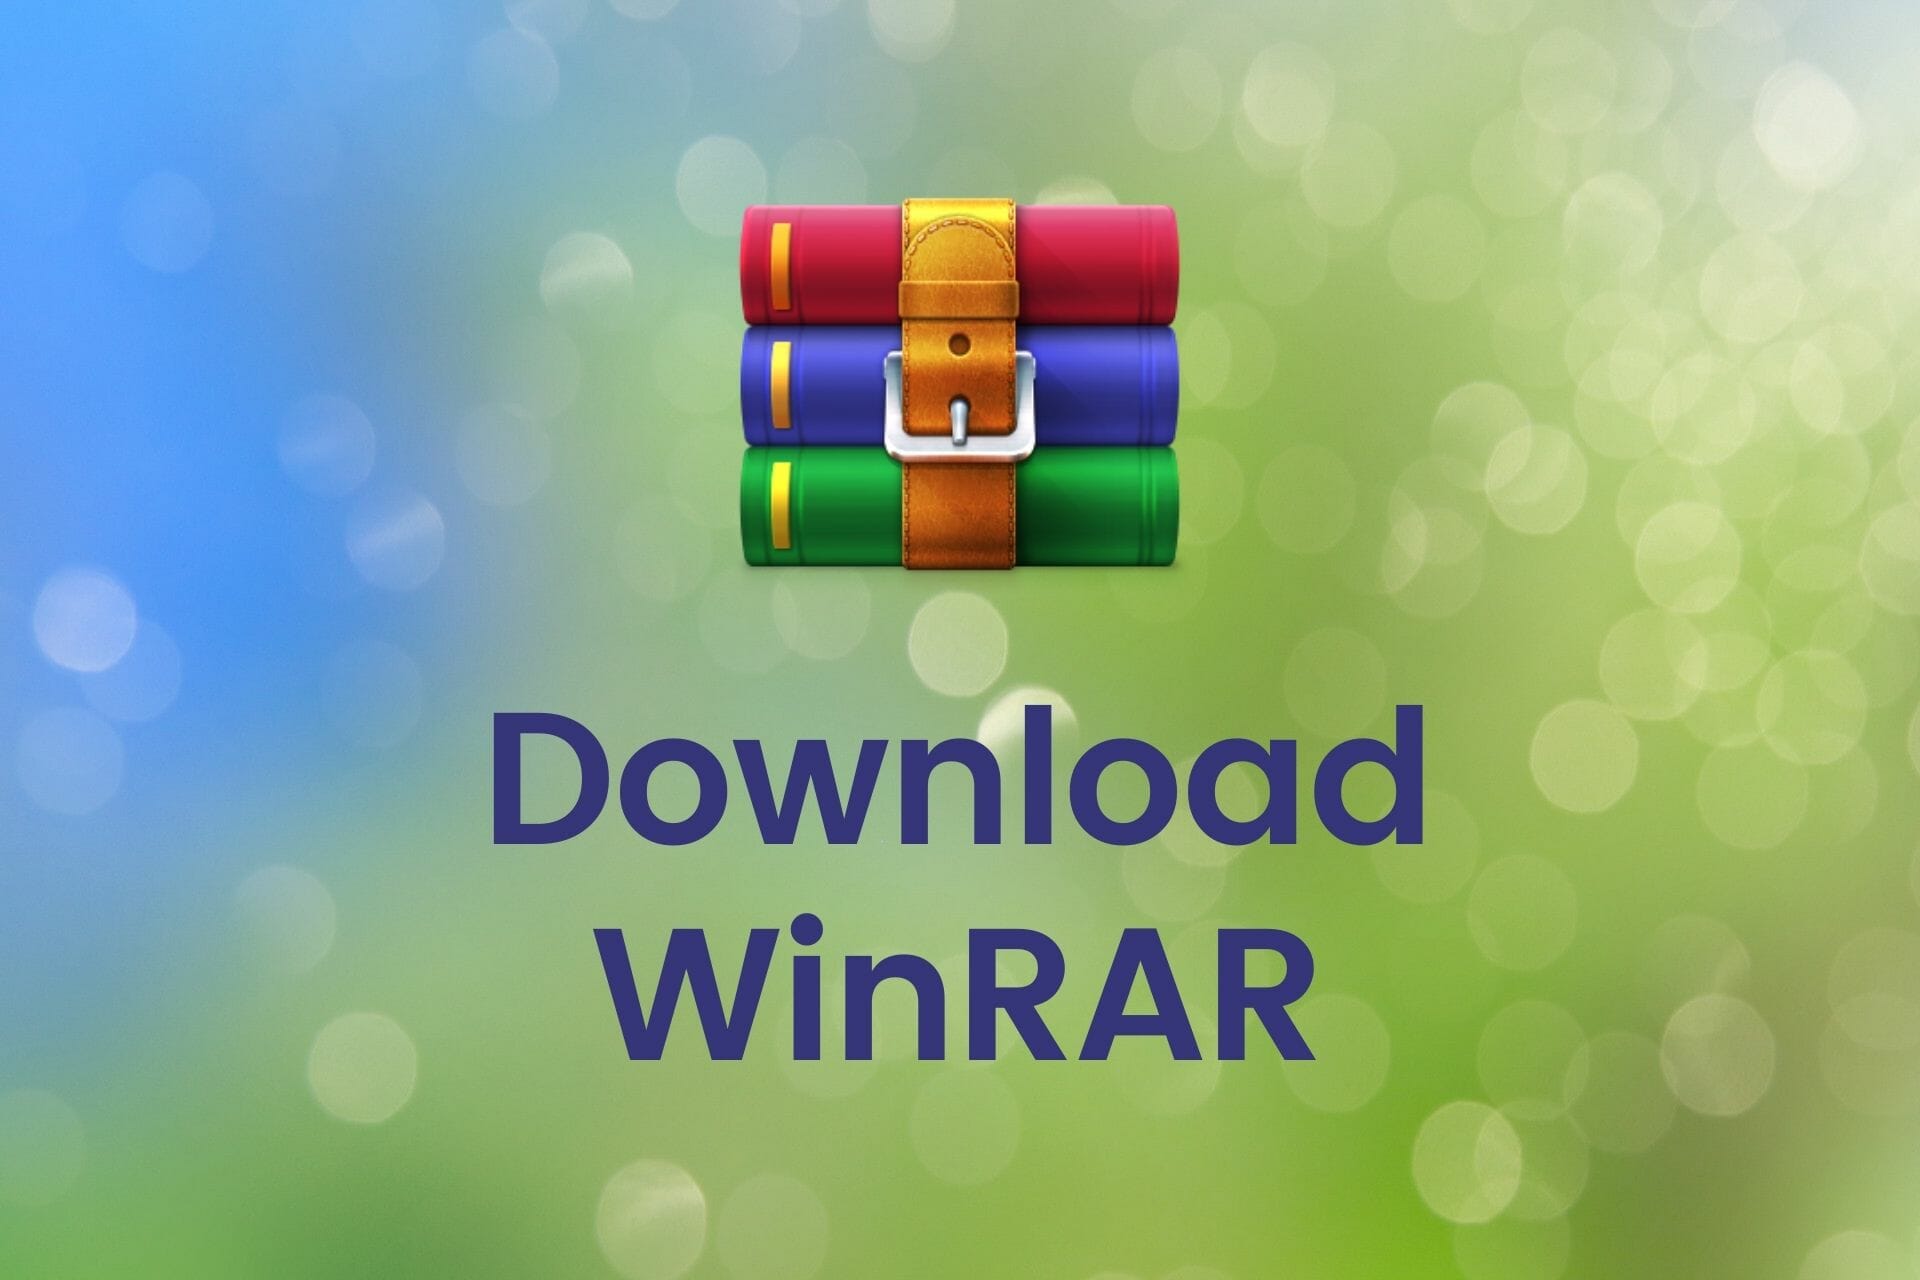 winrar full download free